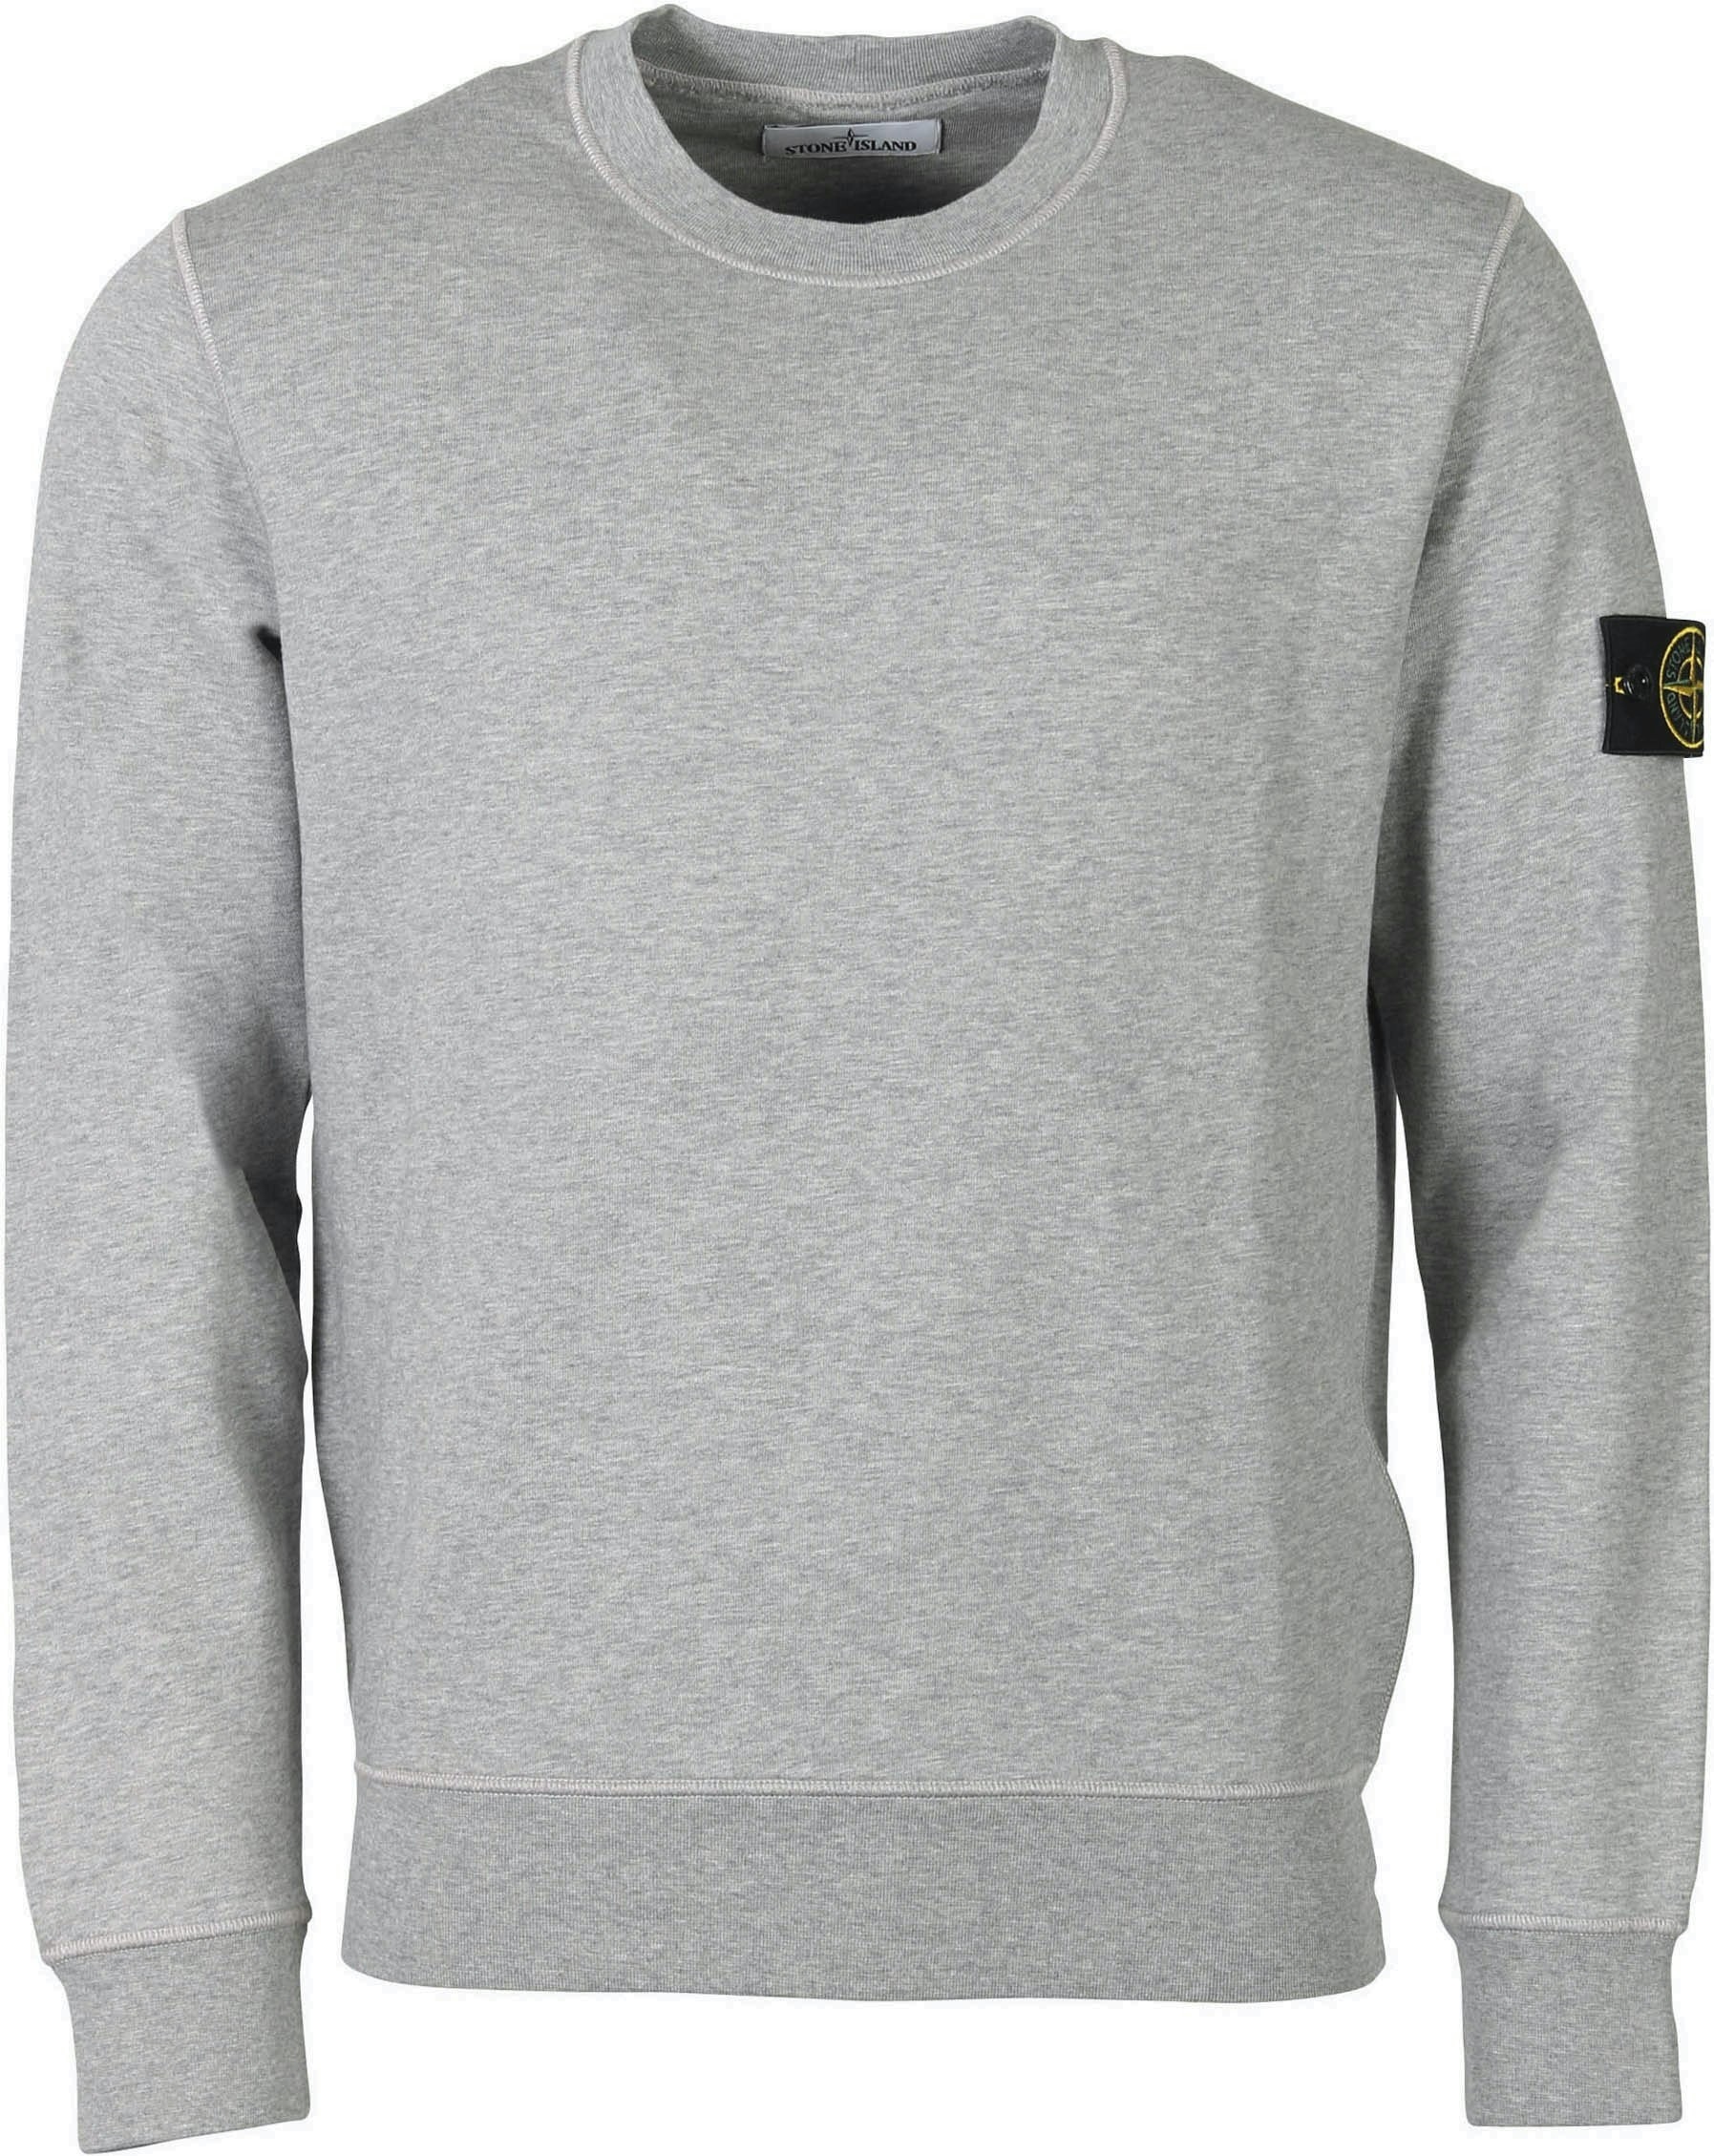 STONE ISLAND Sweatshirt in Melange Grey M